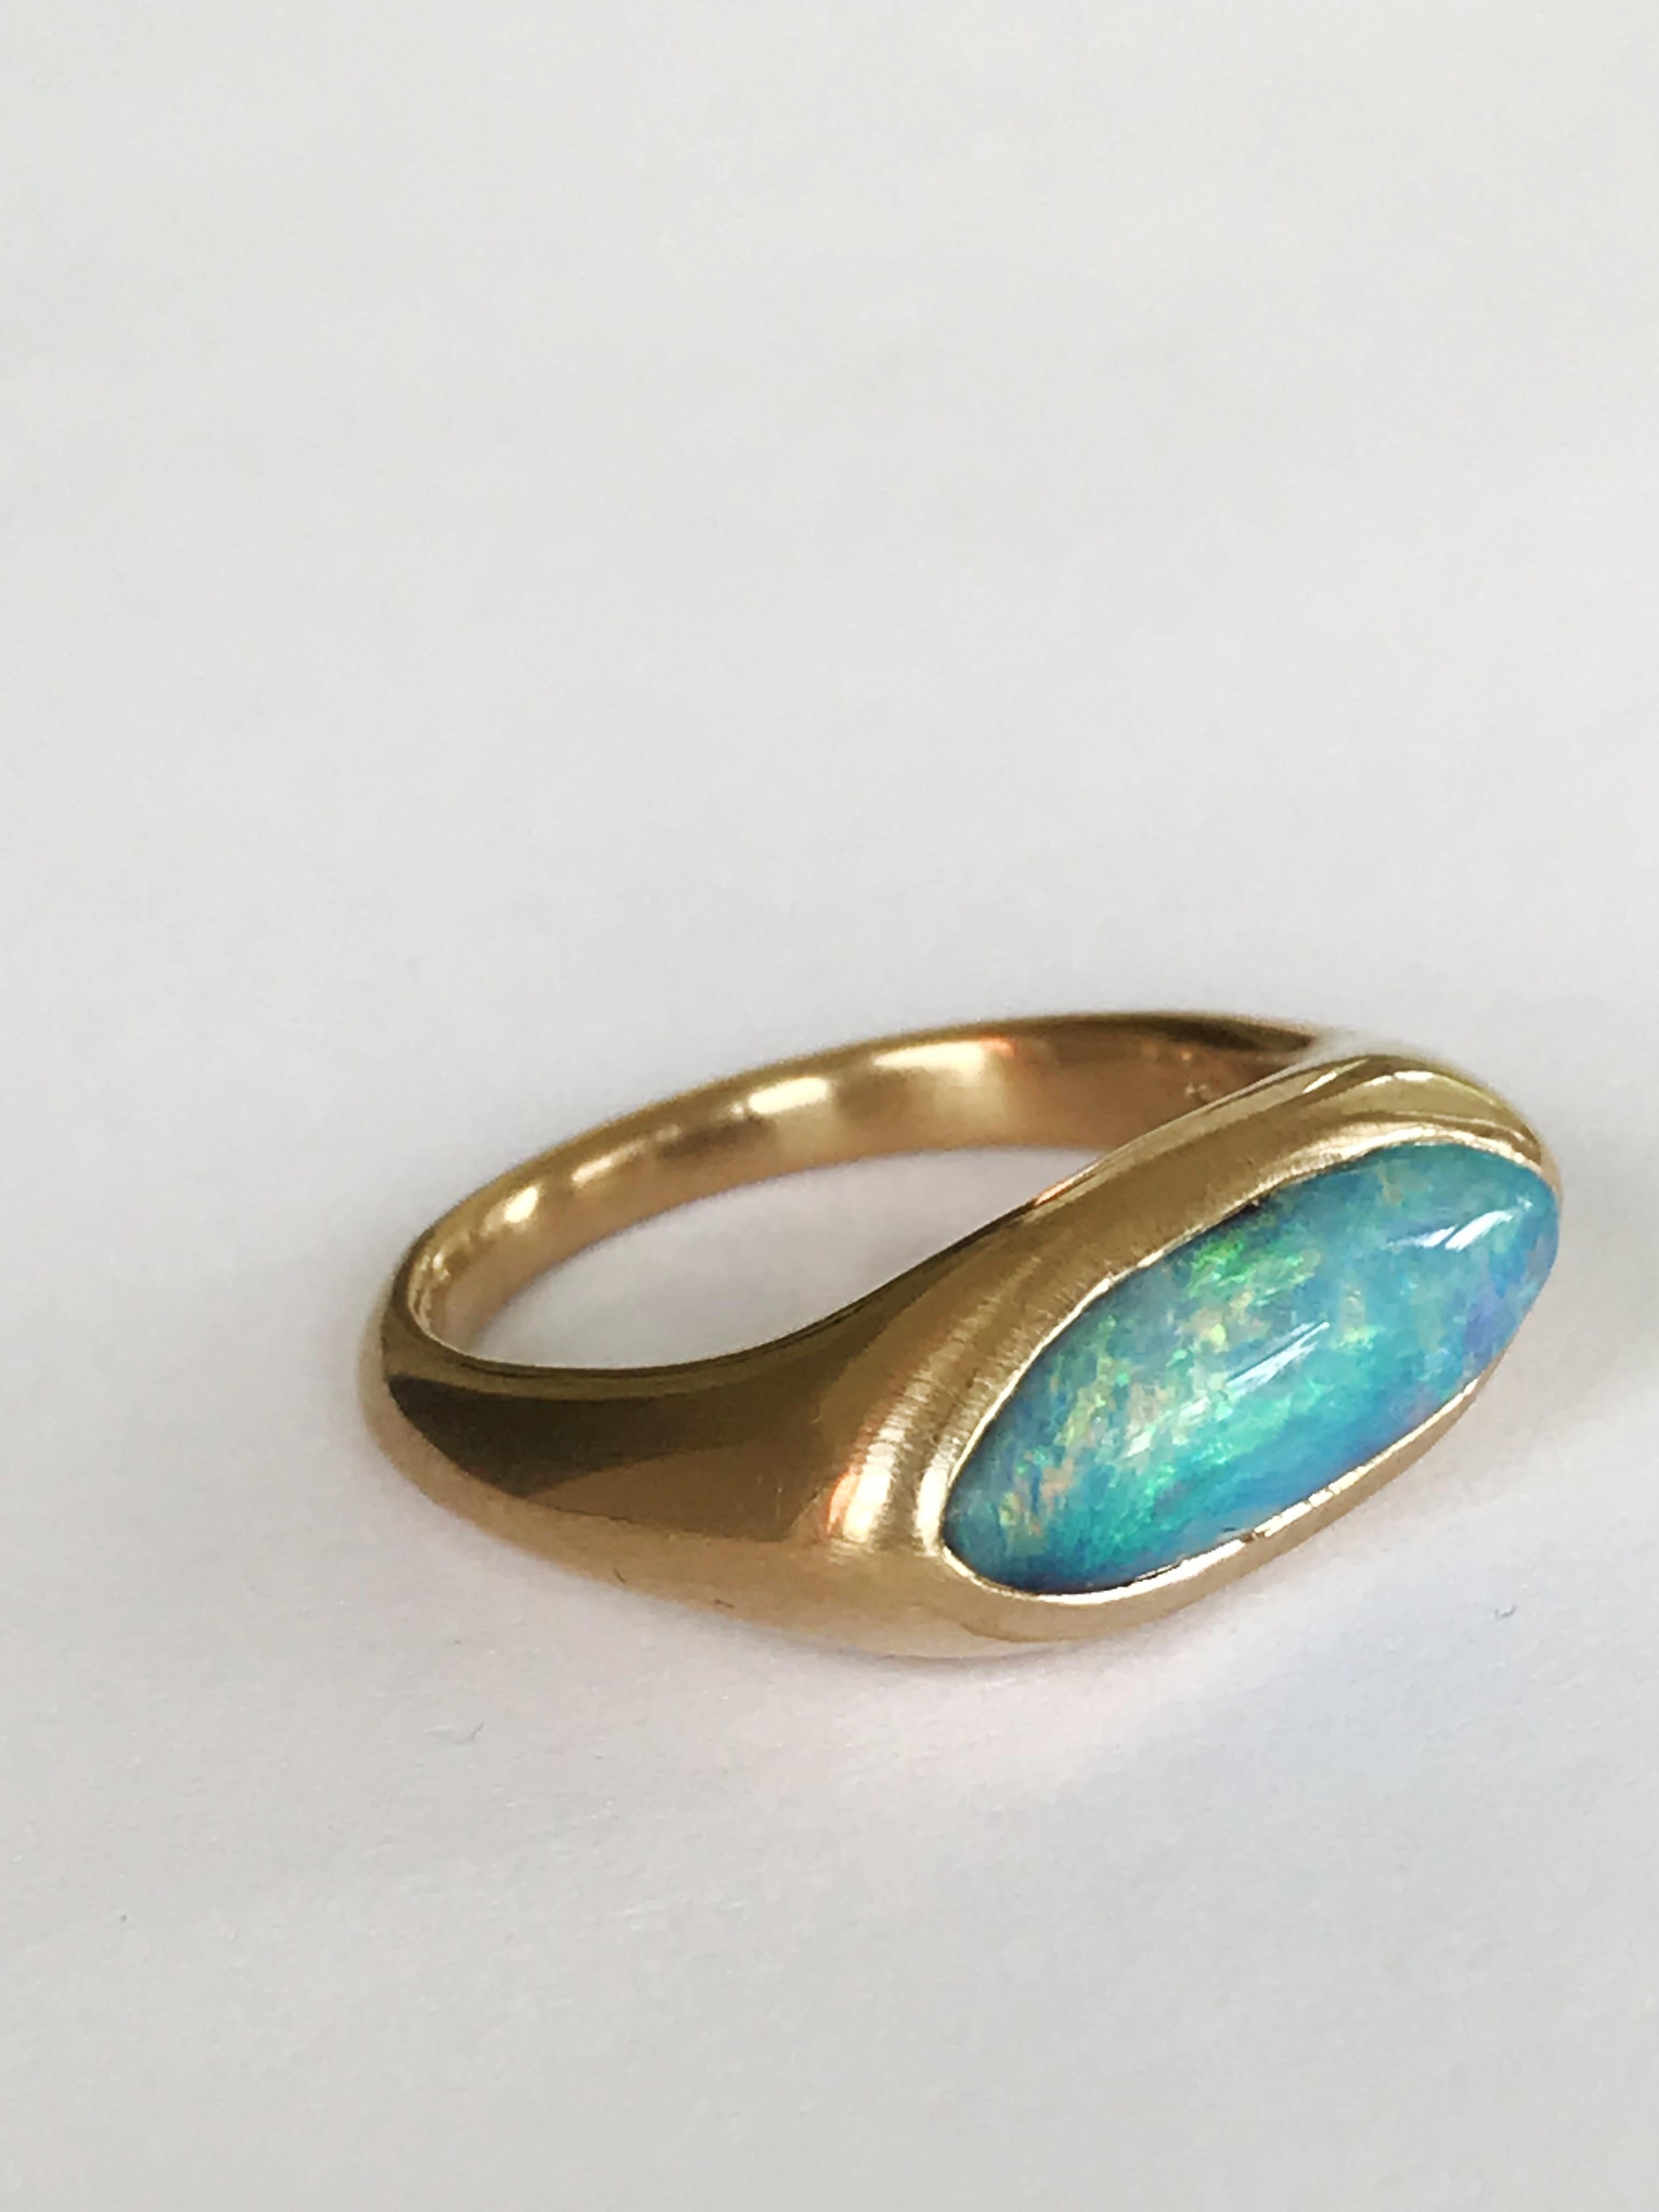 Dalben design One of a kind 18 kt yellow gold ring with a 3,15 carat bezel-set deep light blue navette shape Australian Boulder Opal  .  
Ring size 7 1/4 - EU 55 re-sizable .  
Bezel setting dimension:  
max width 18,5 mm,  
max height 8,9 mm. 
The